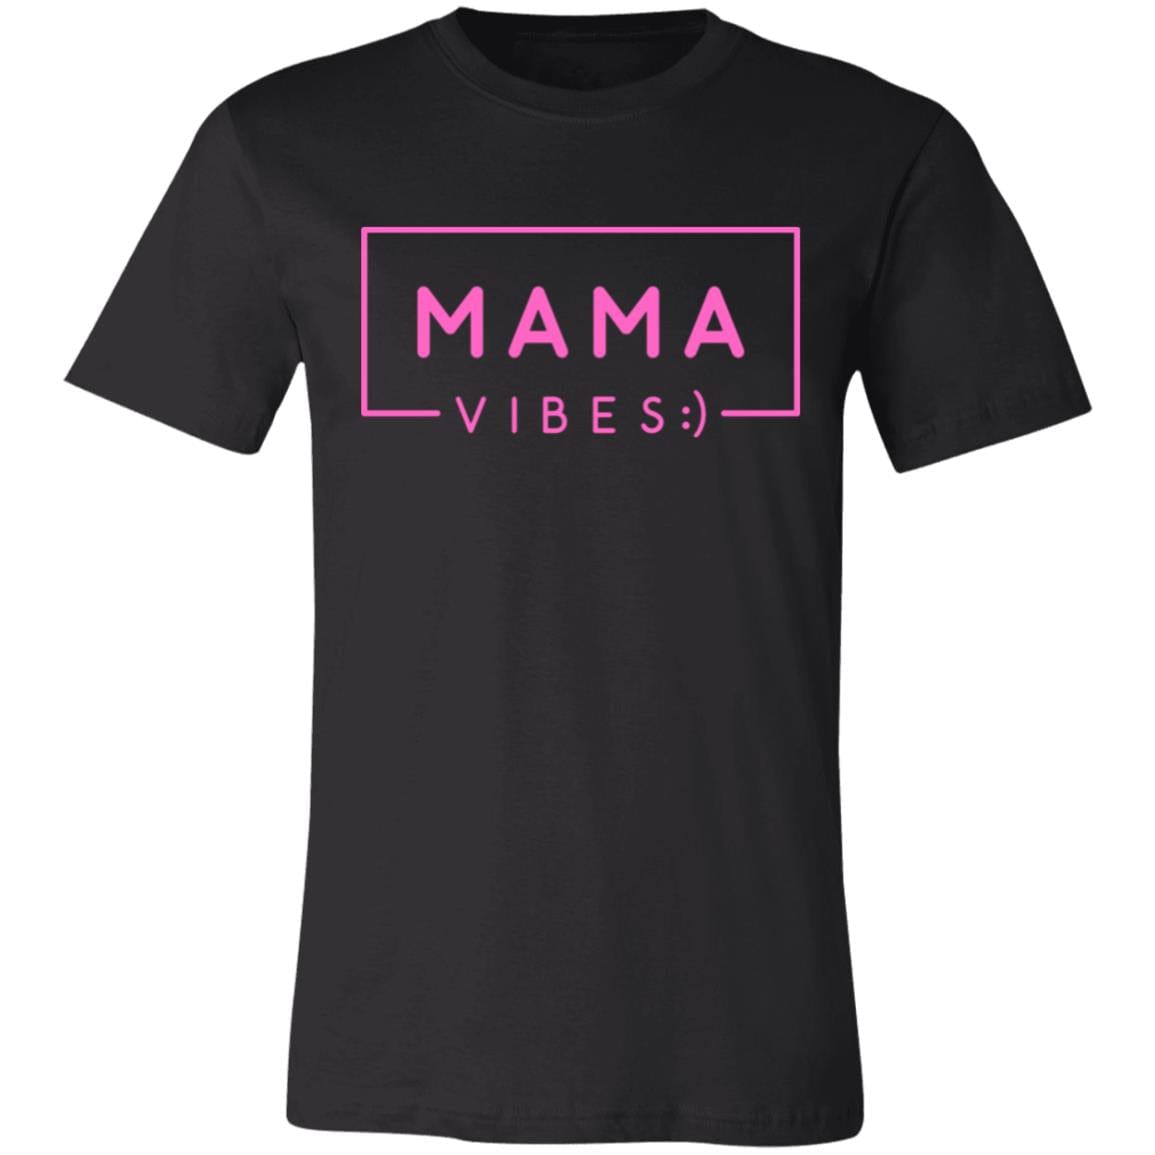 mama vibes 3001C Unisex Jersey Short-Sleeve T-Shirt